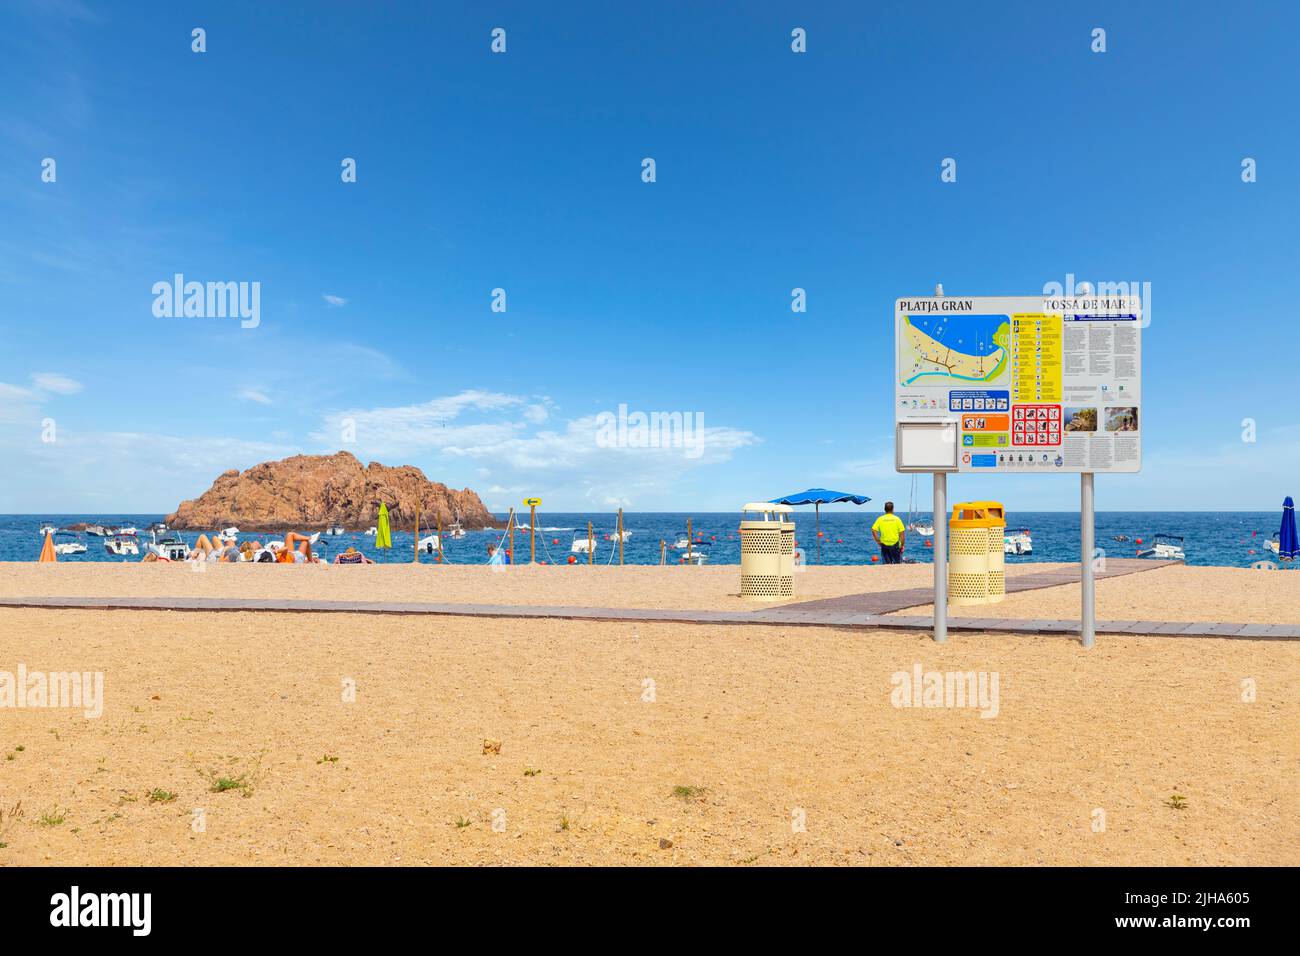 The sandy Platja Gran beach at the resort town of Tossa de Mar, Spain, on the Costa Brava coast of the Mediterranean Sea. Stock Photo